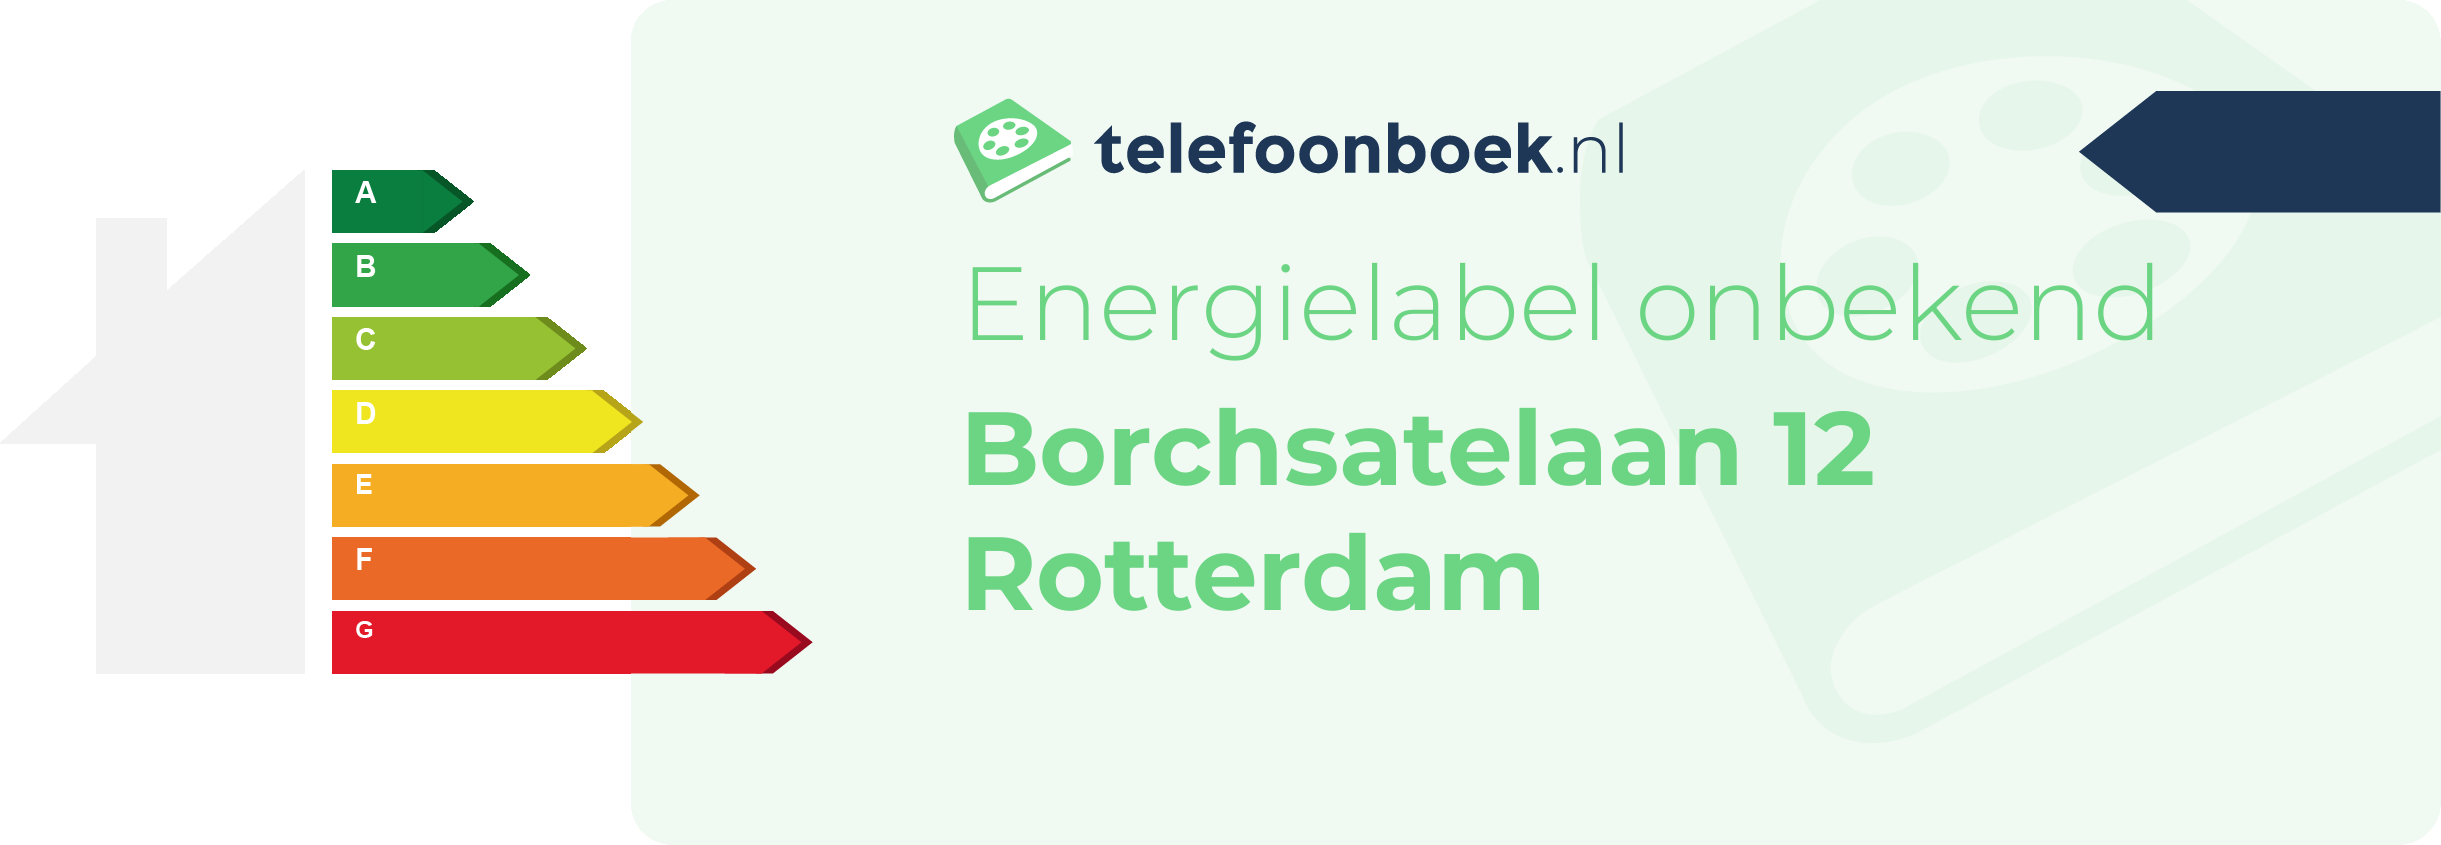 Energielabel Borchsatelaan 12 Rotterdam